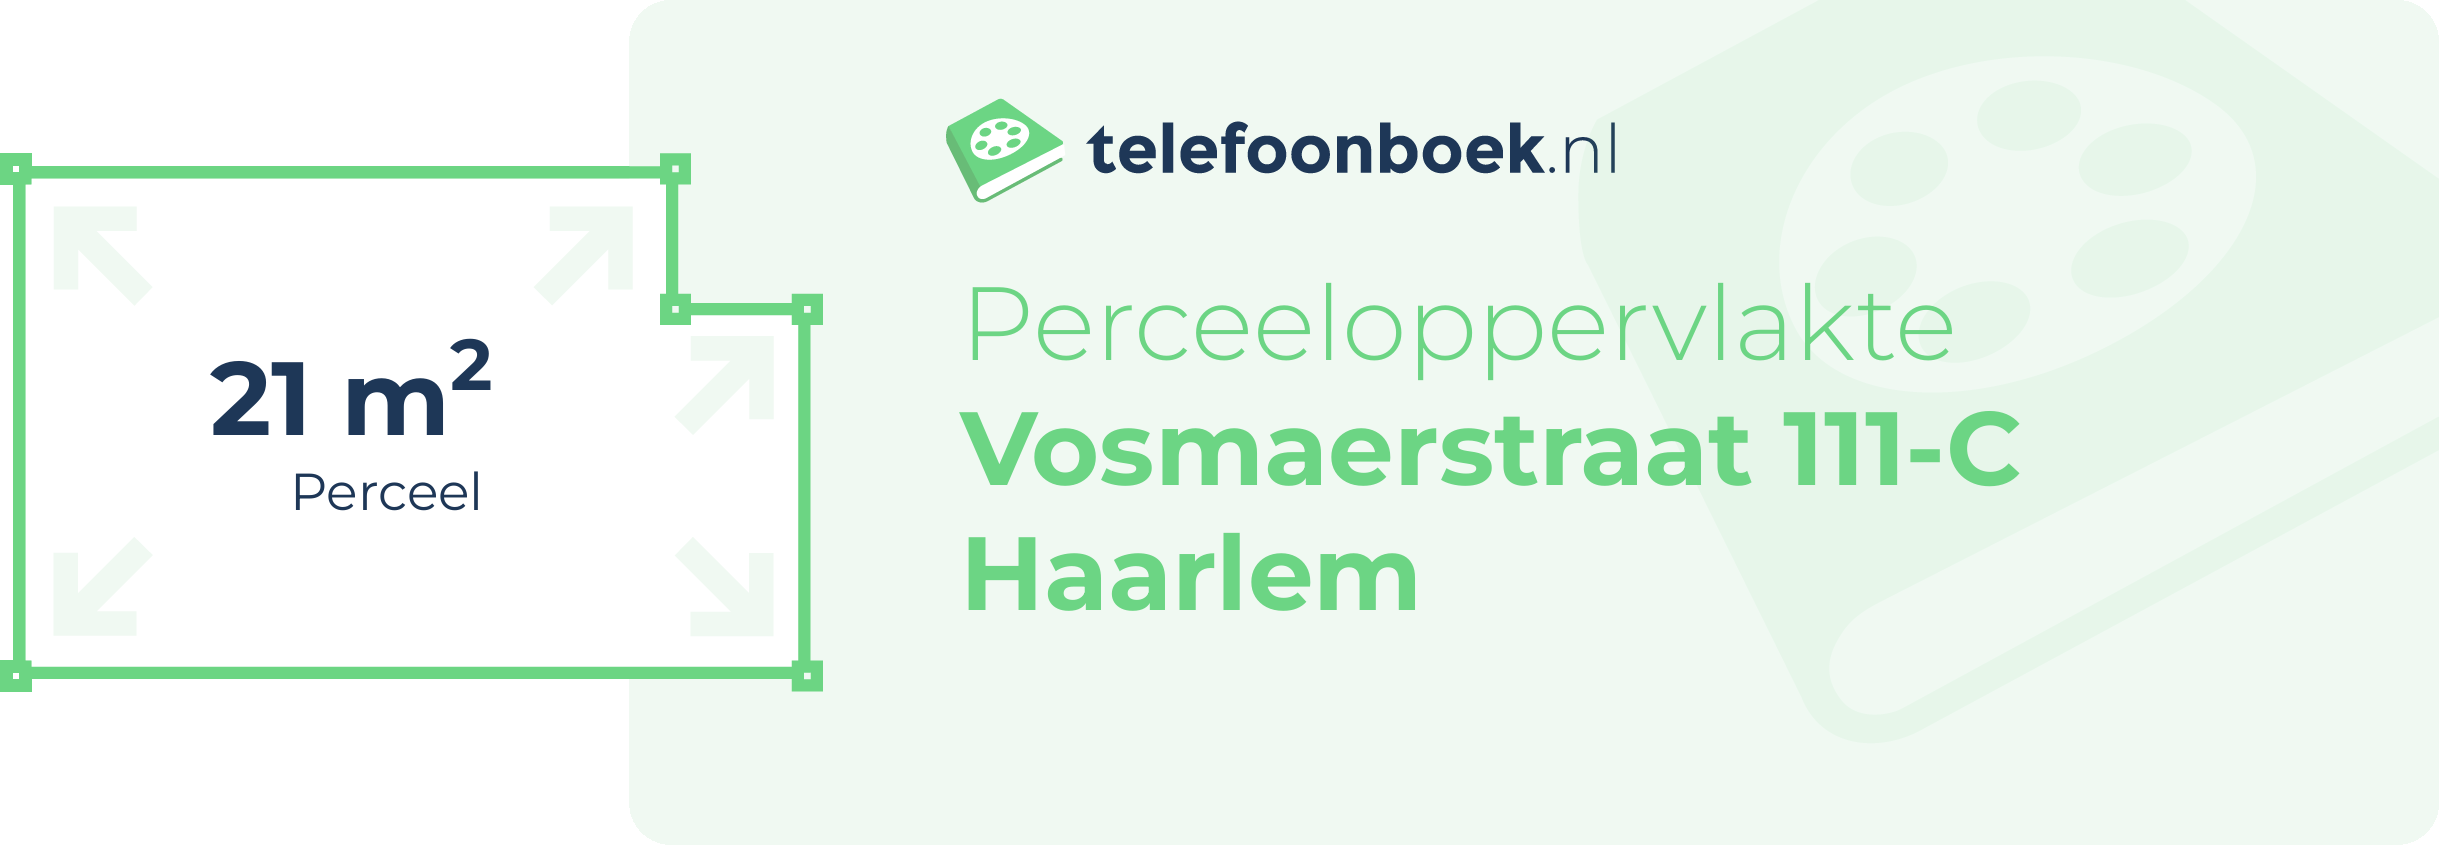 Perceeloppervlakte Vosmaerstraat 111-C Haarlem